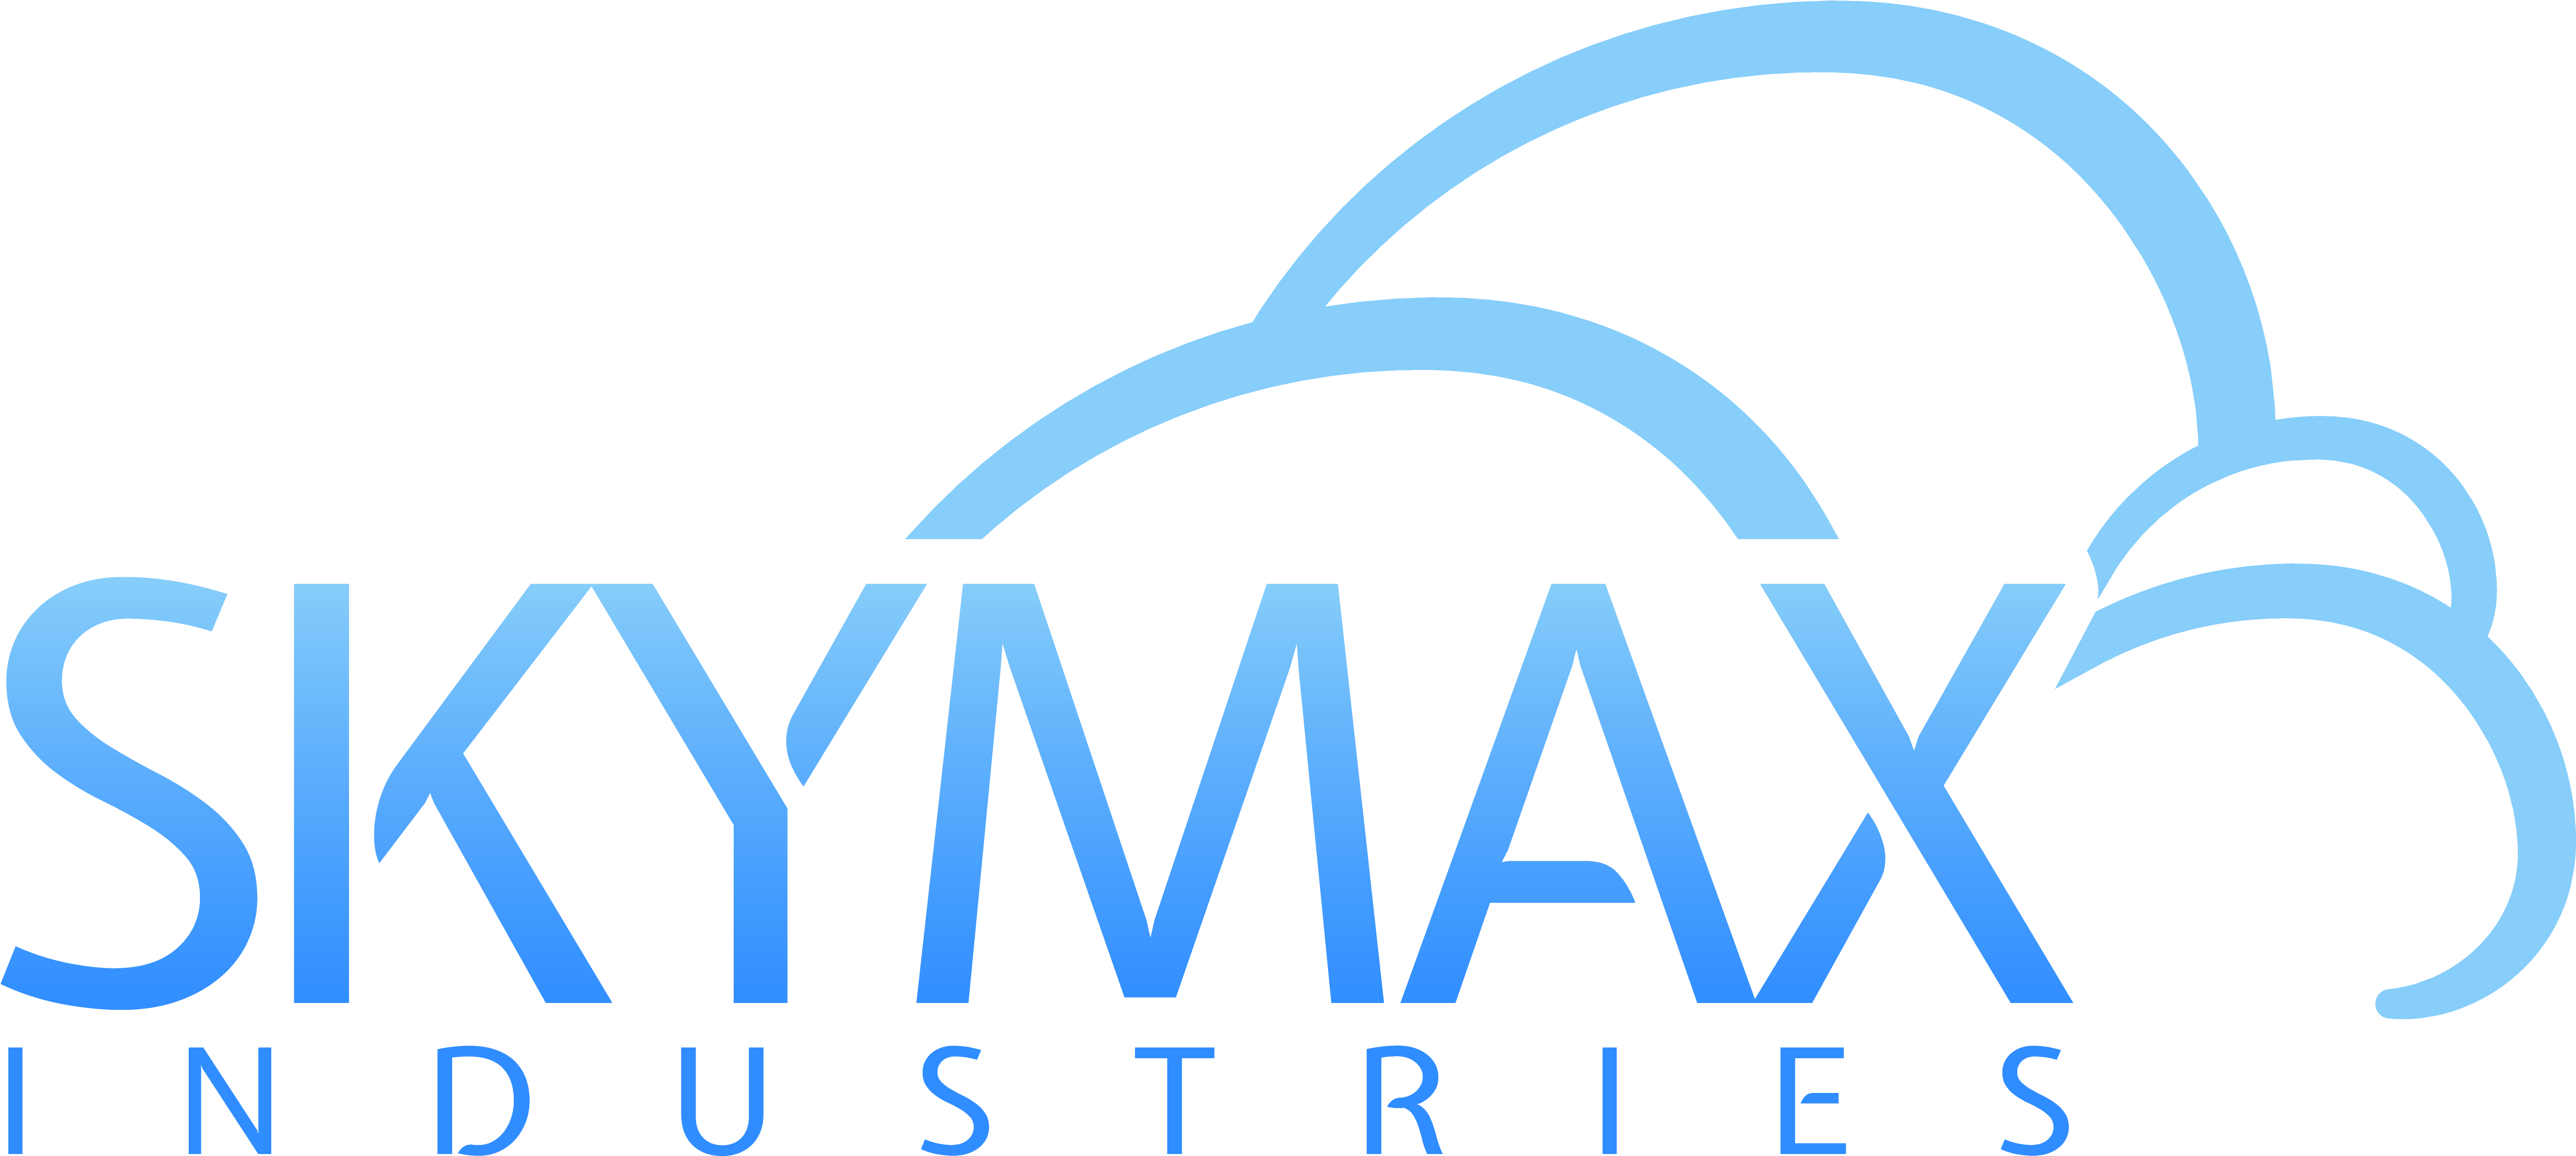 Skymax Industries - Business (5400x2415)